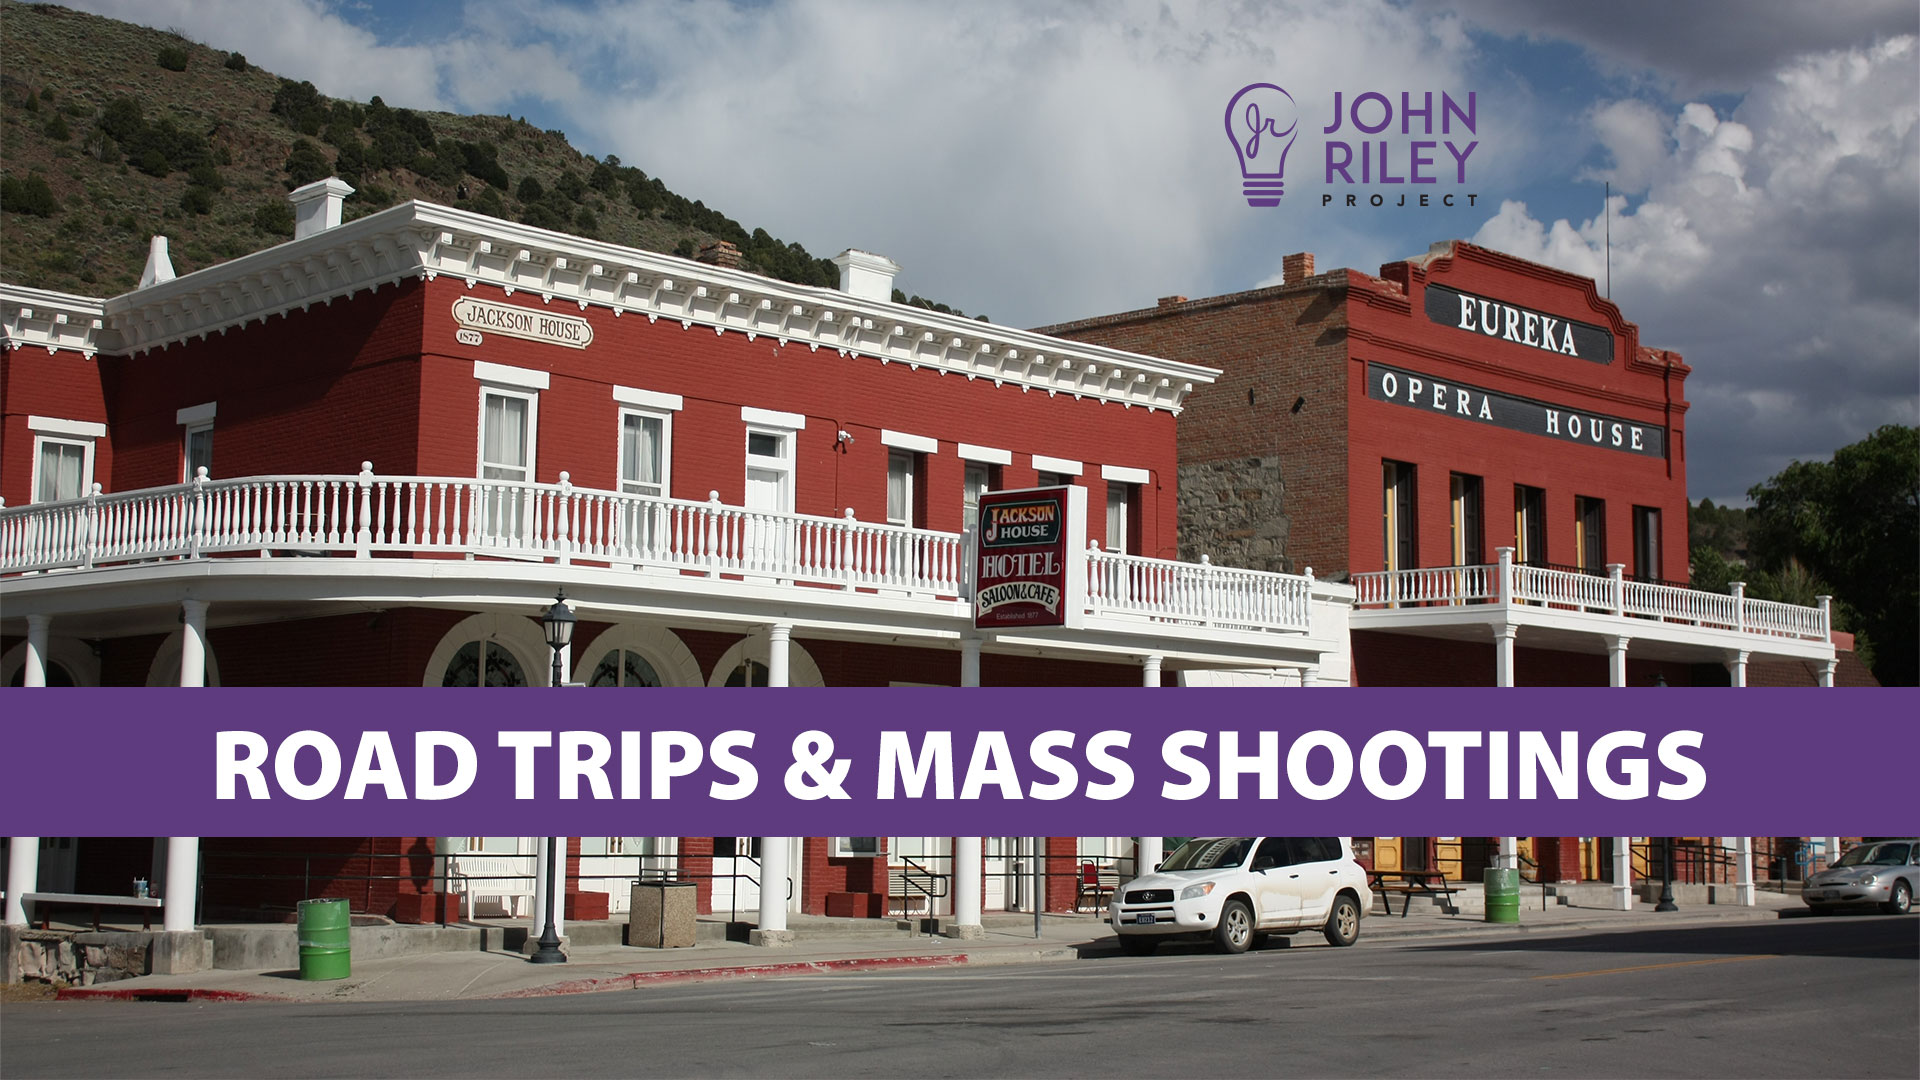 eureka, road trips, mass shootings, john riley project, jrp0215